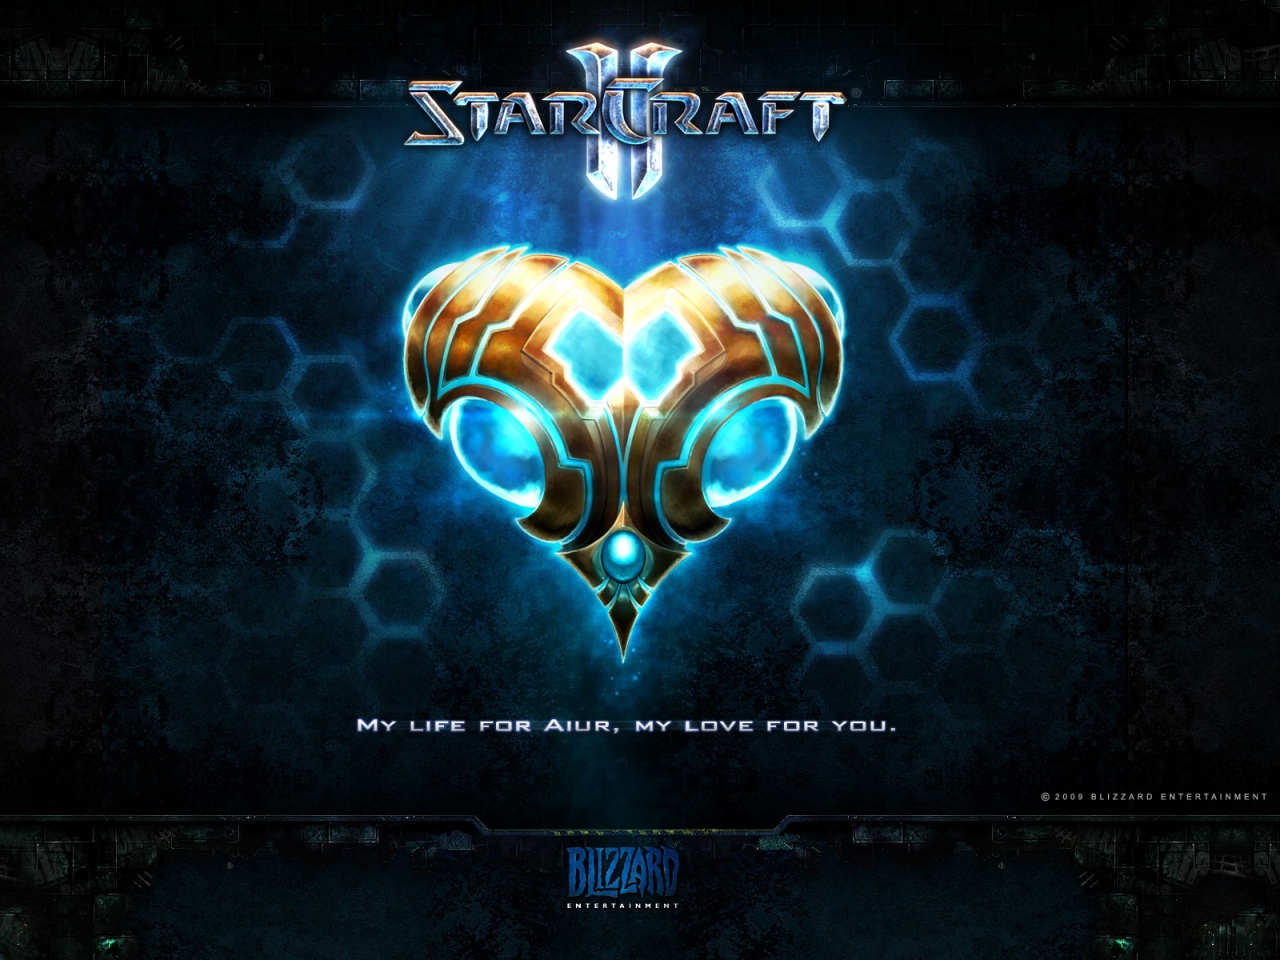 StarCraft 2 - My life for Aiur